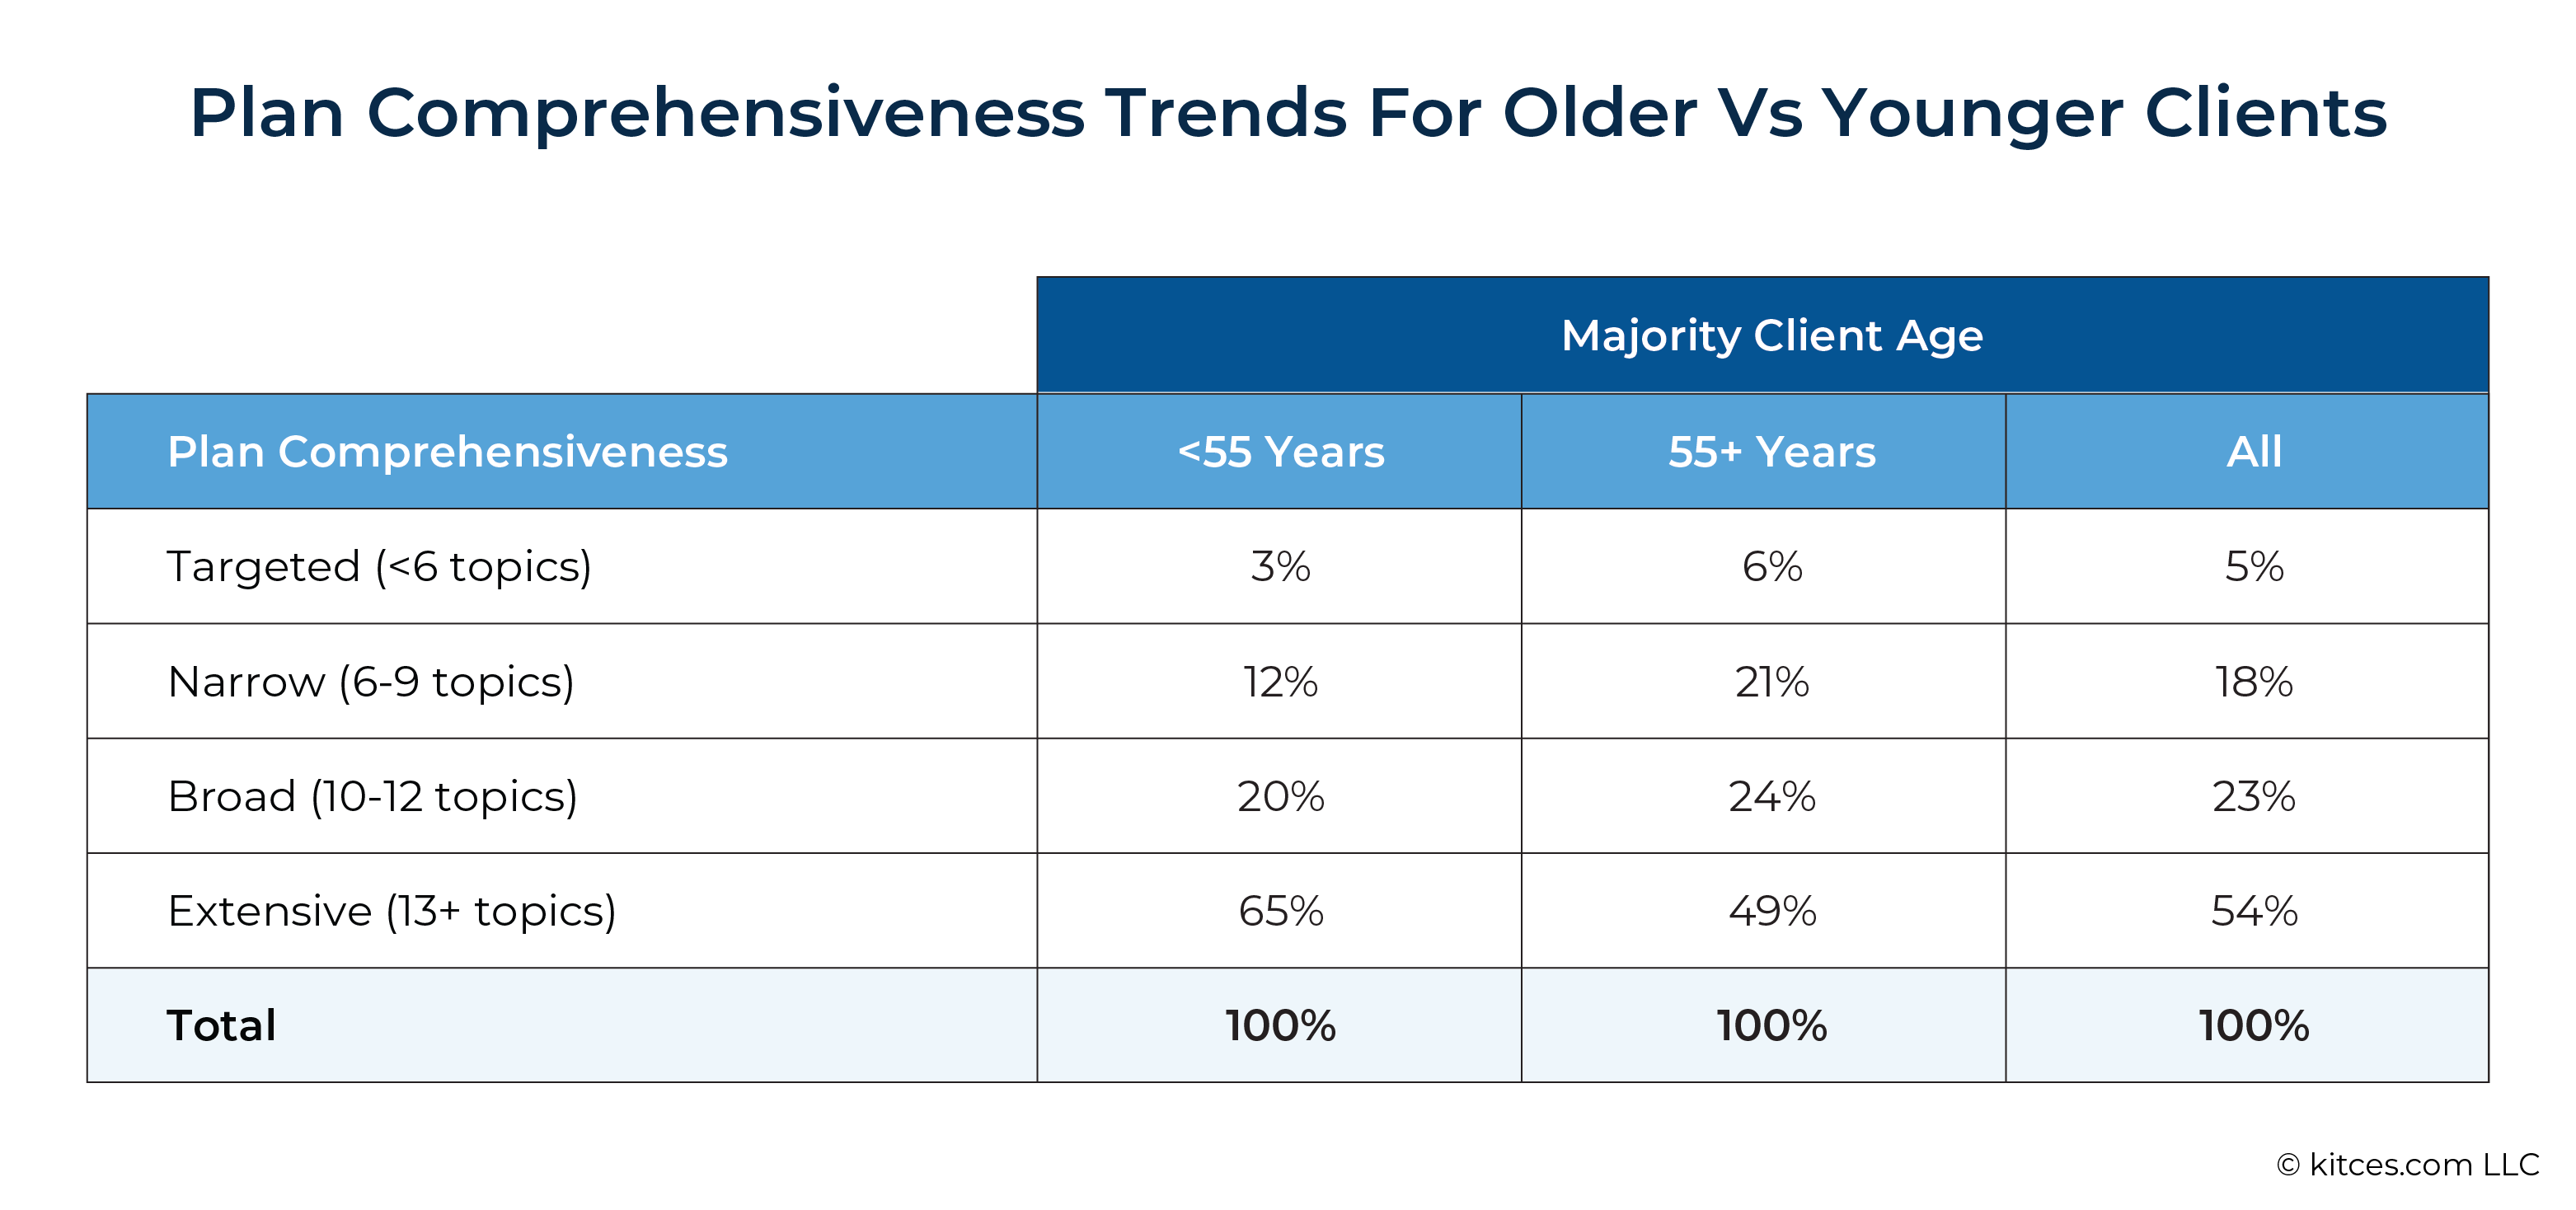 Plan Comprehensiveness Trends For Older Vs Younger Clients